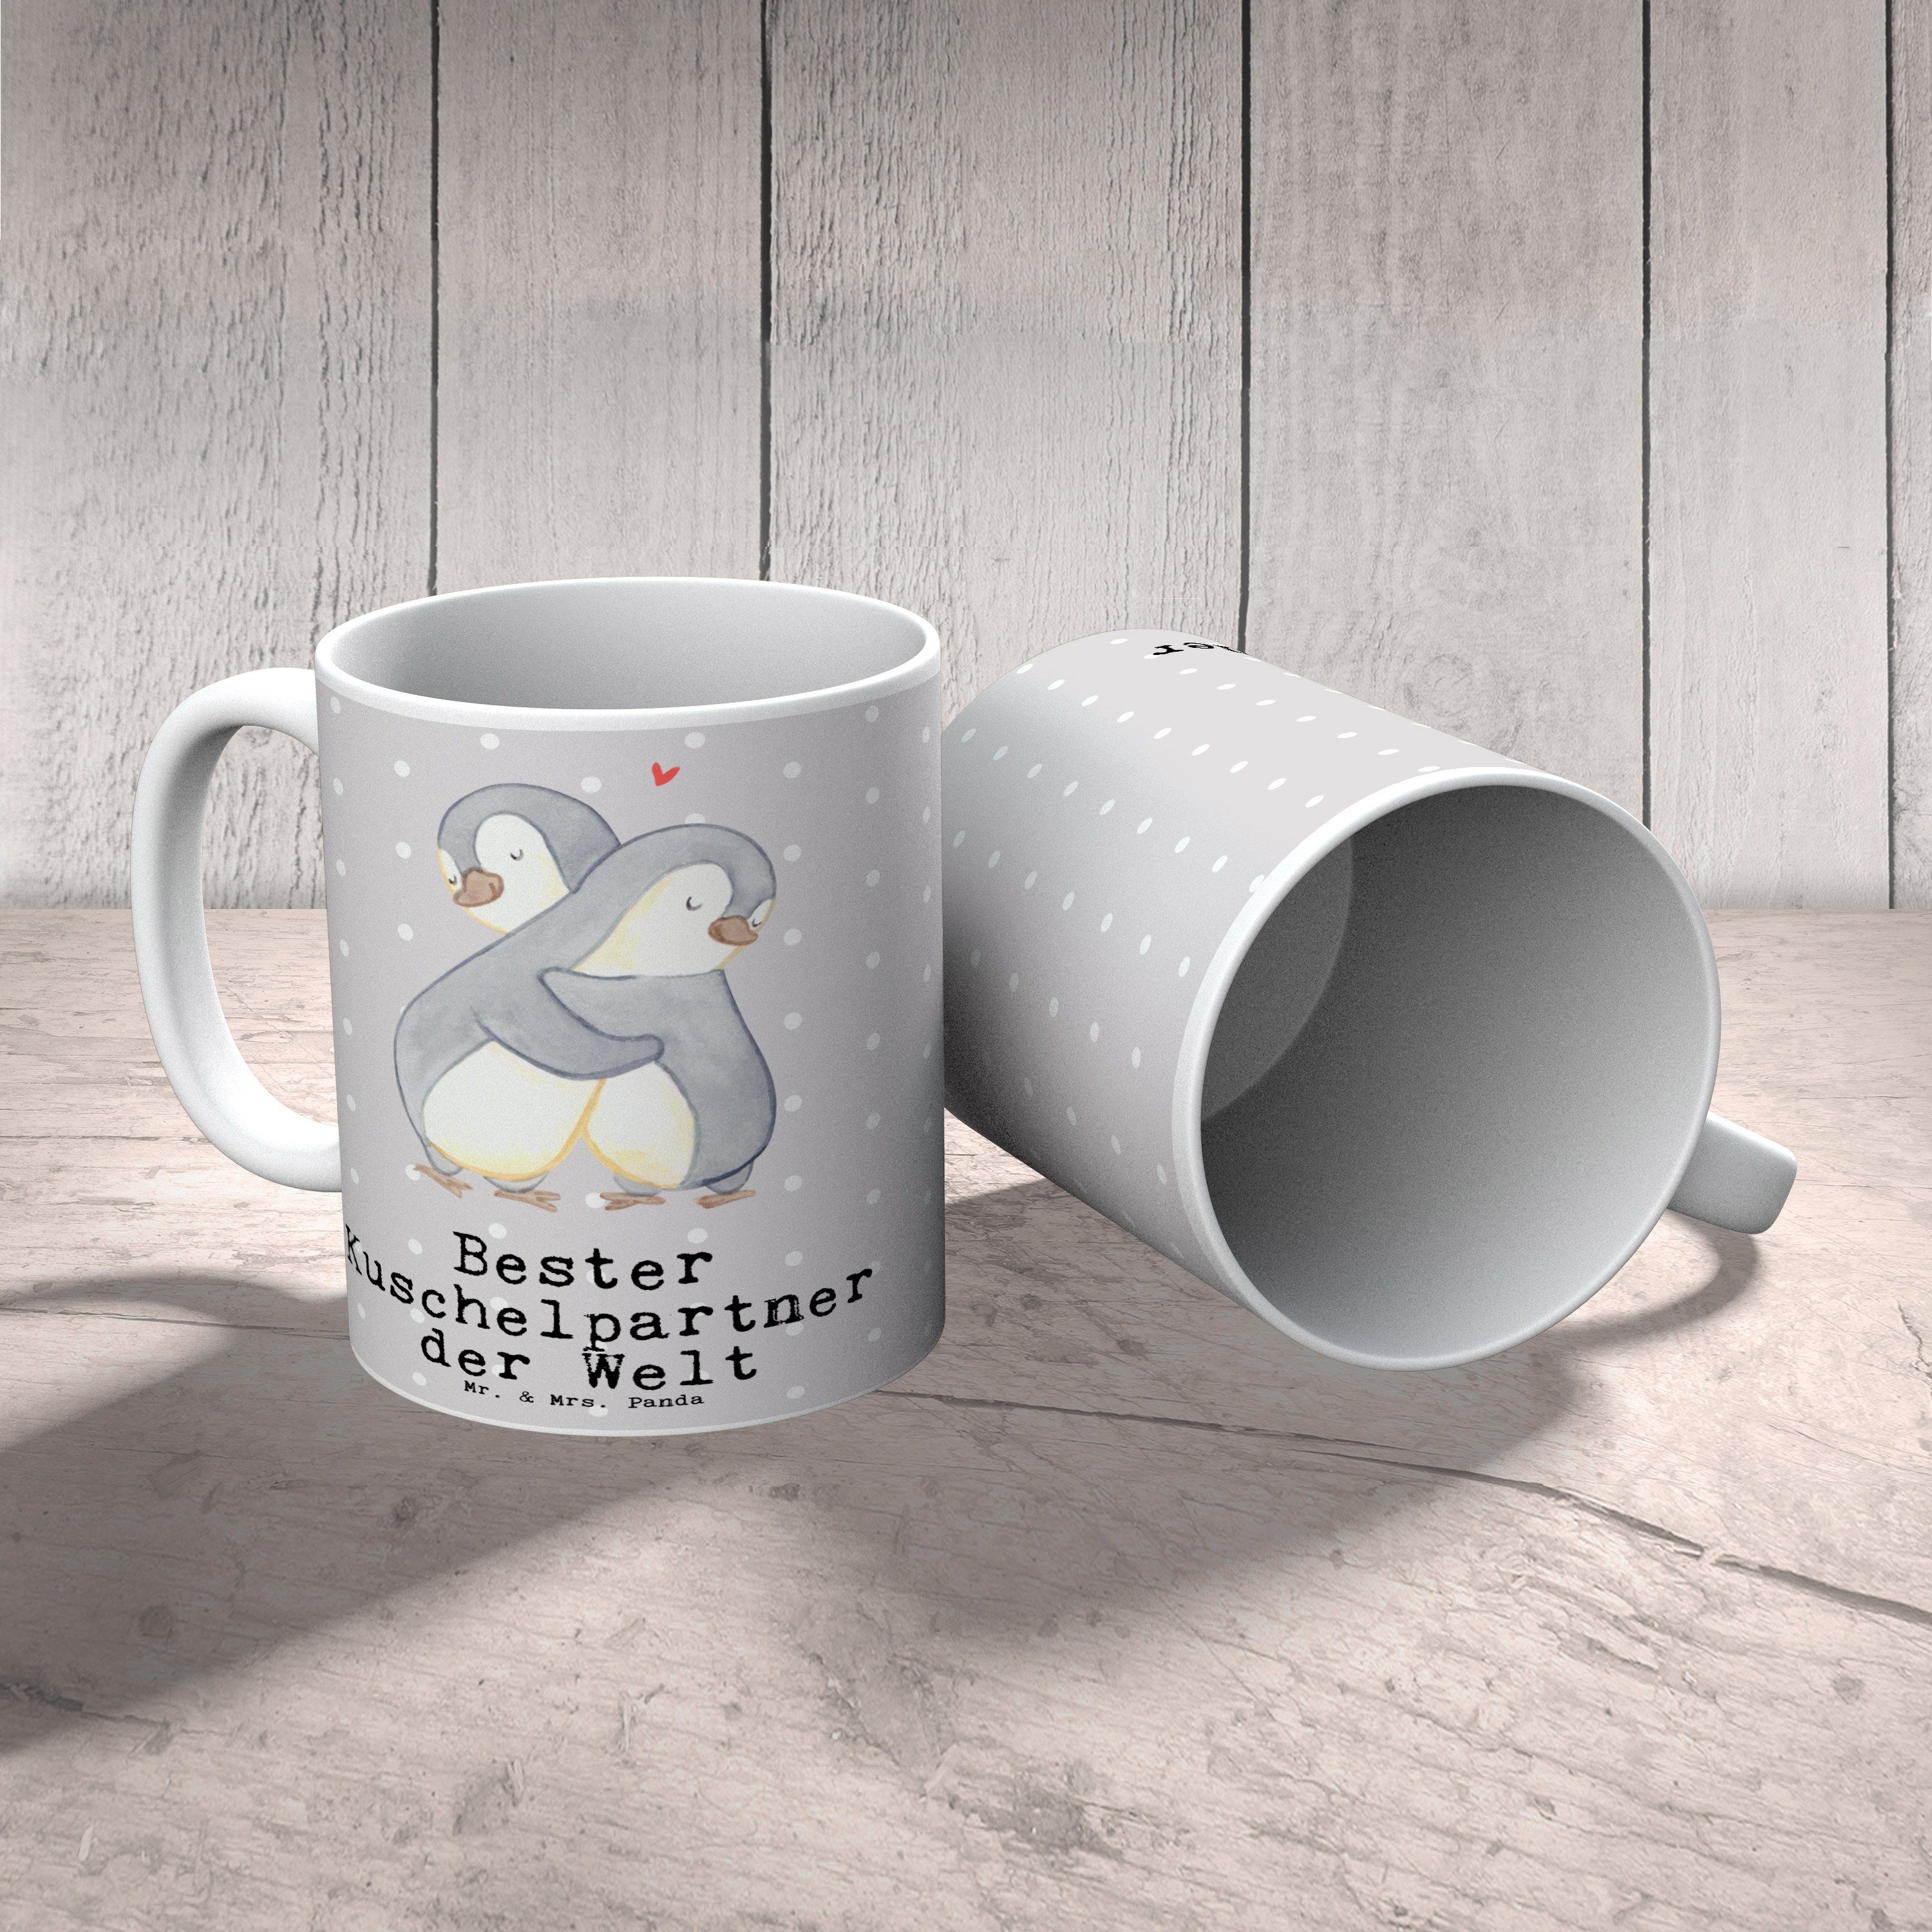 der Keramik - Bester Pinguin Tasse Mrs. Kaf, - Panda & Welt Pastell Grau Mr. Kuschelpartner Geschenk,